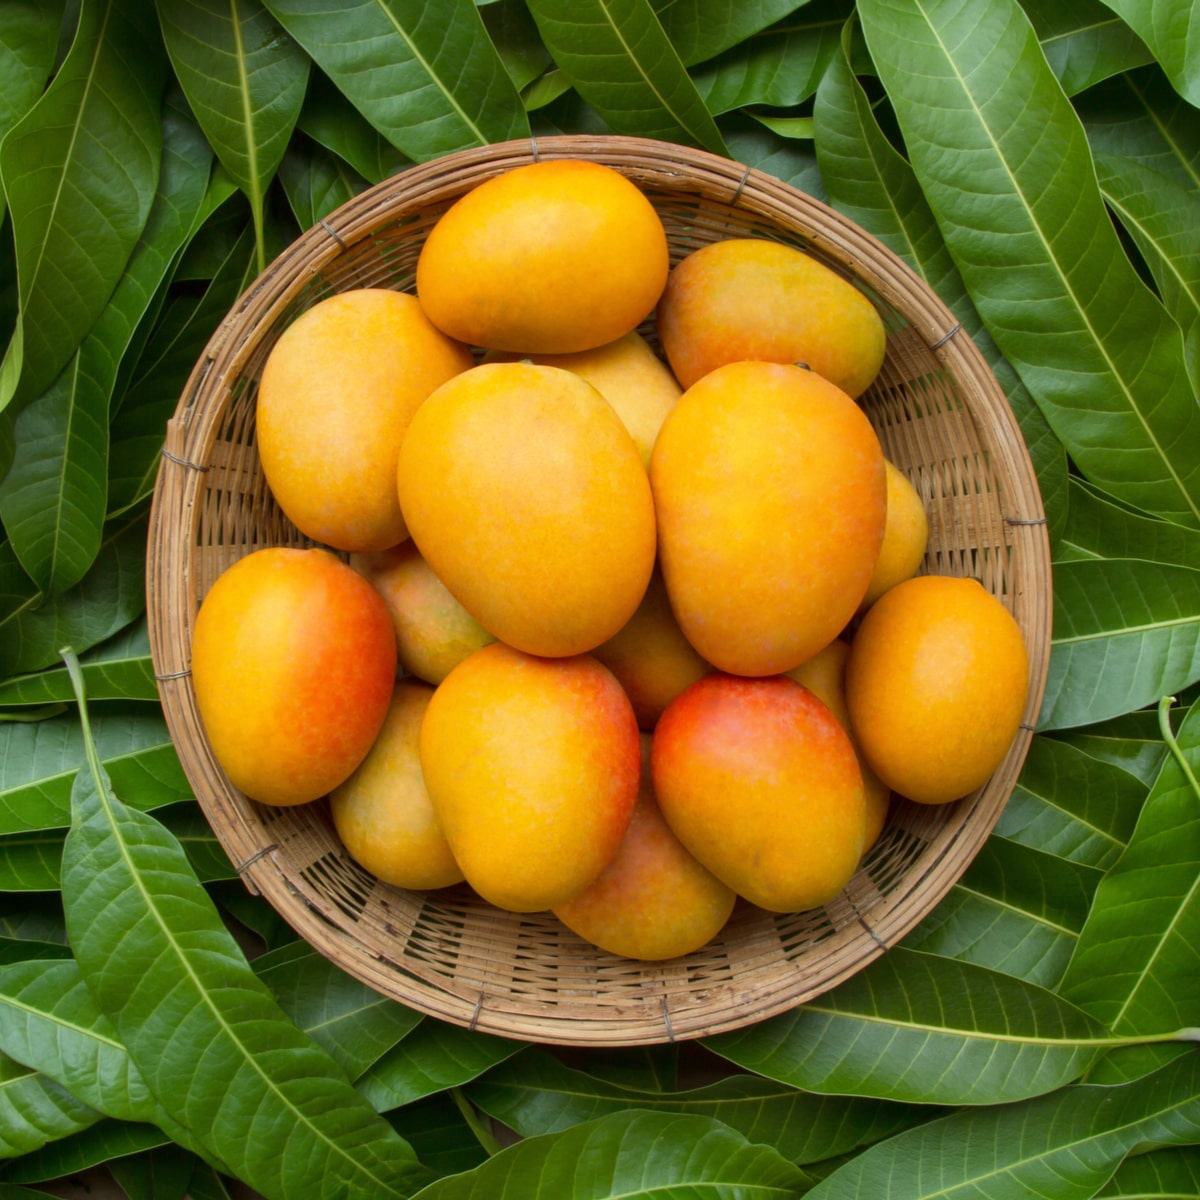 Big news for mango lovers